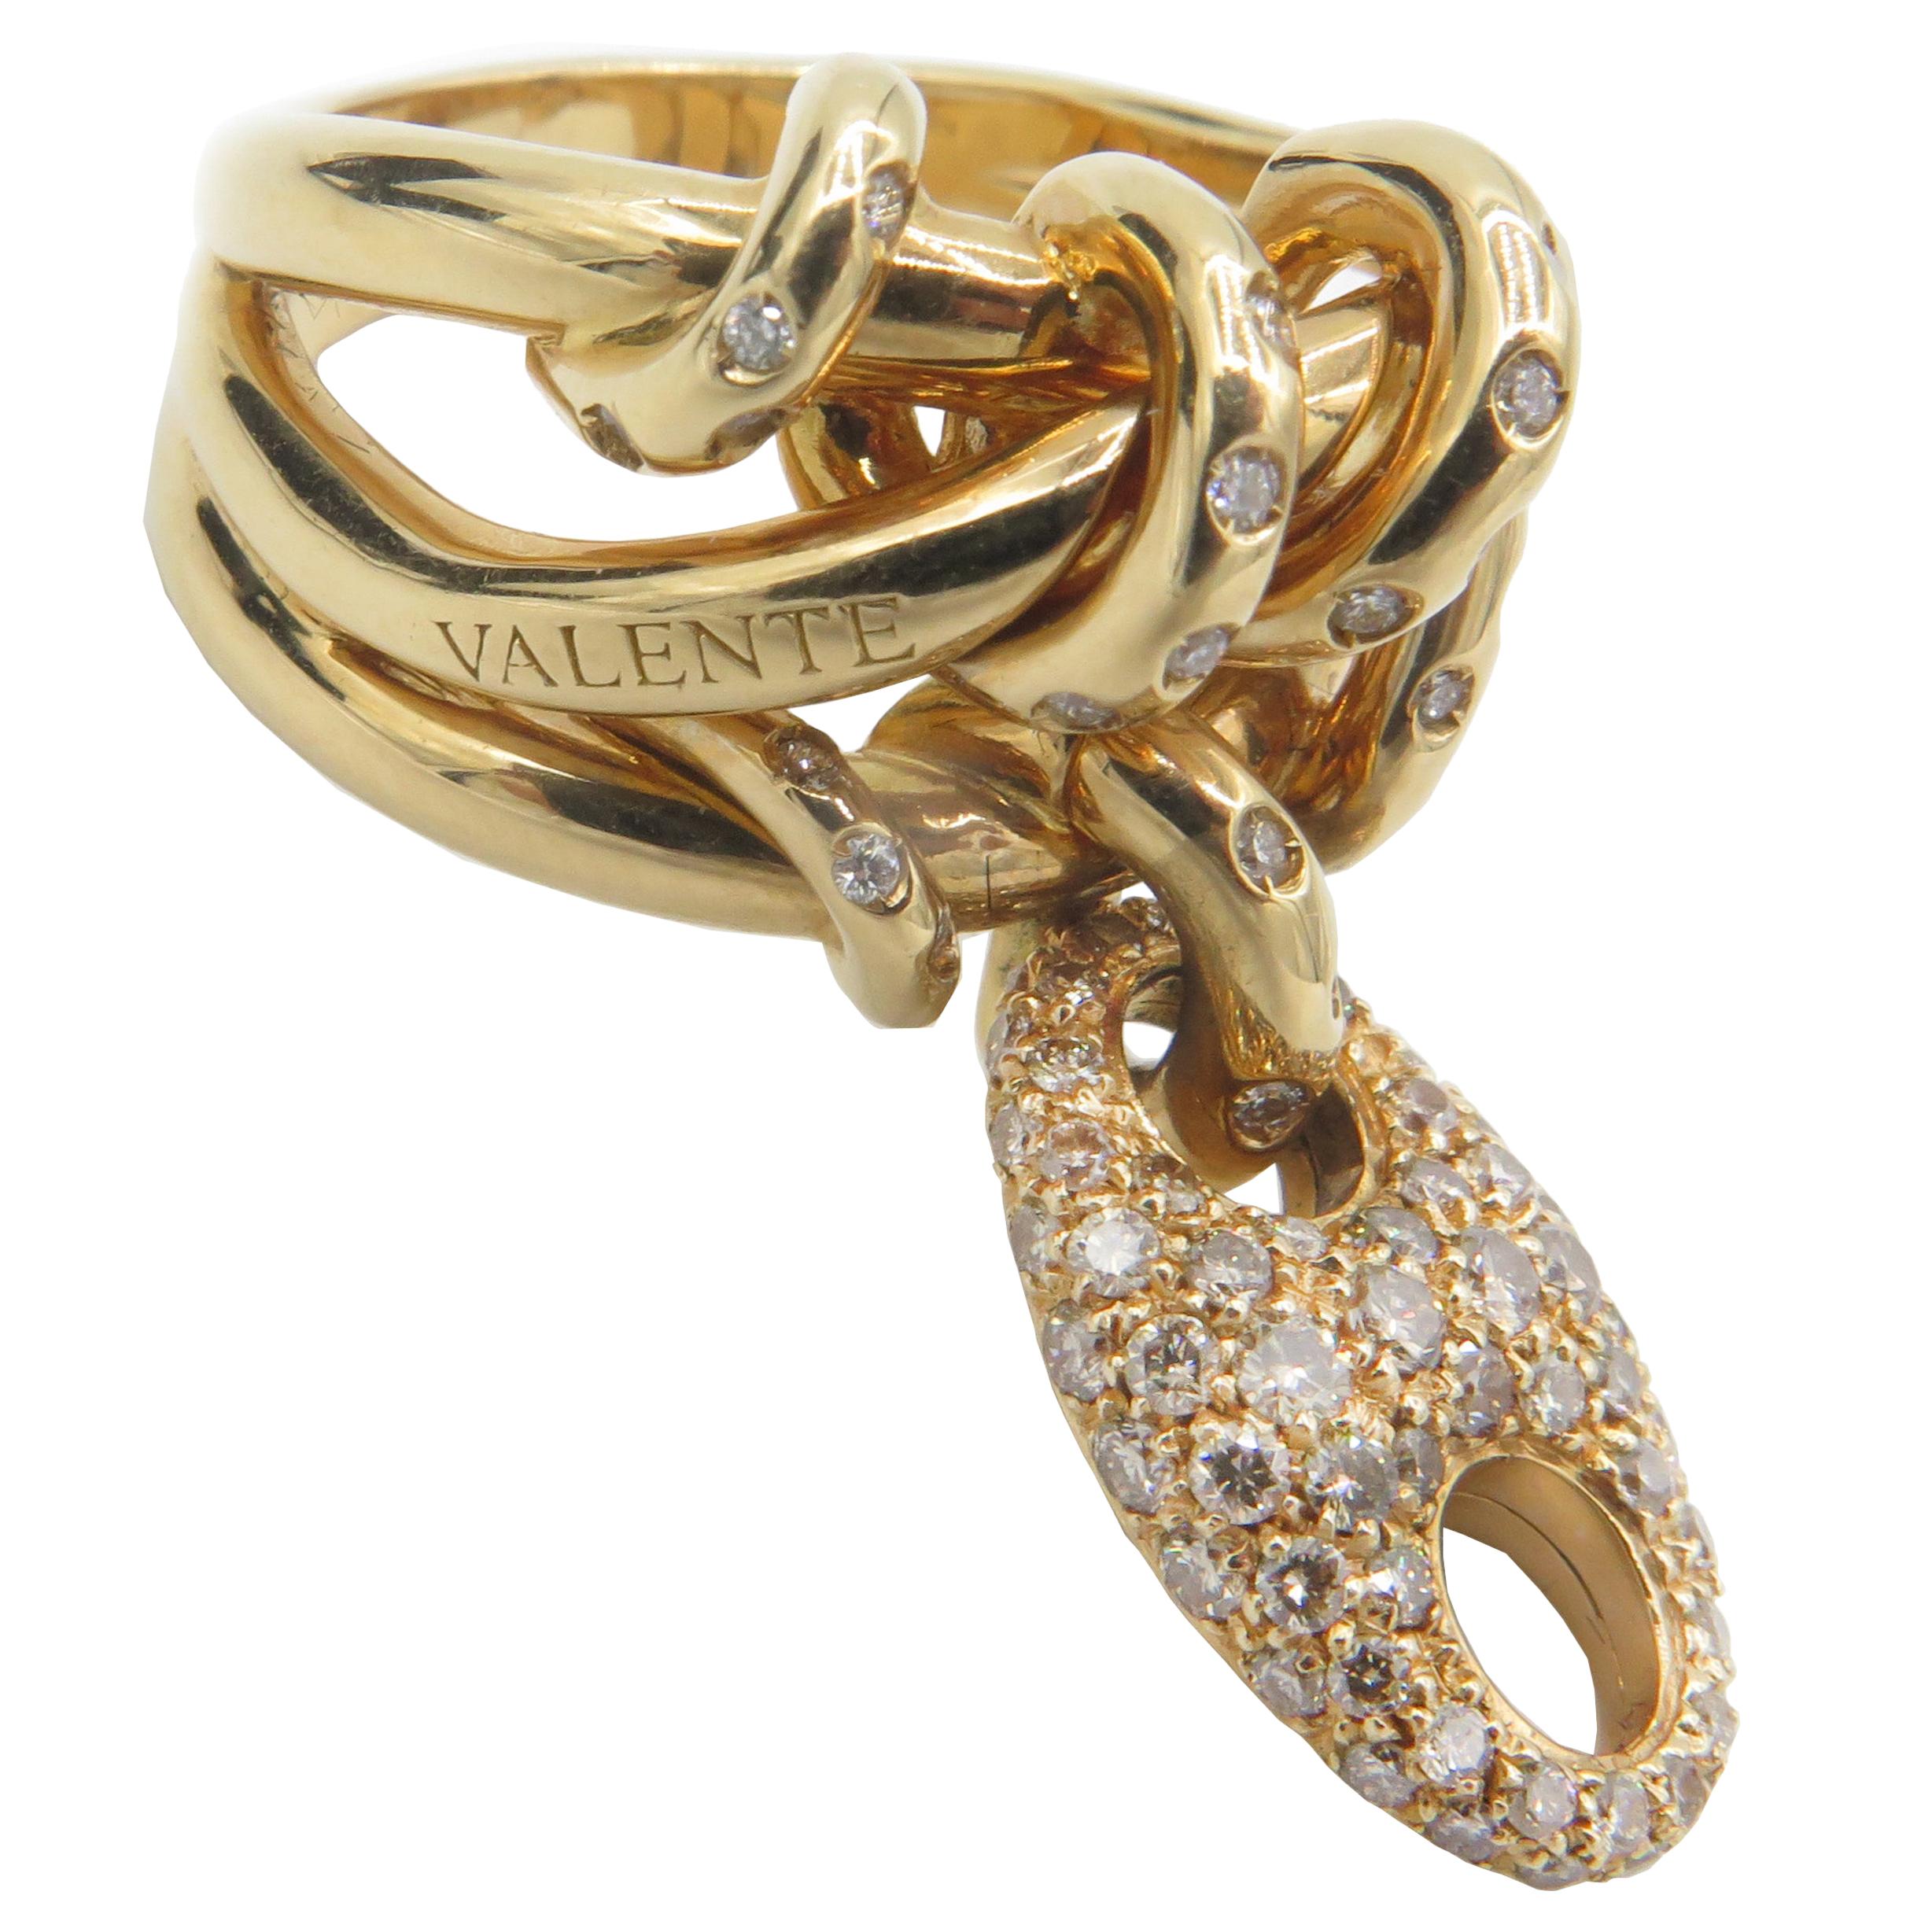 Valente Milano 18 Karat Yellow Gold and Diamond Ring by John Galliano